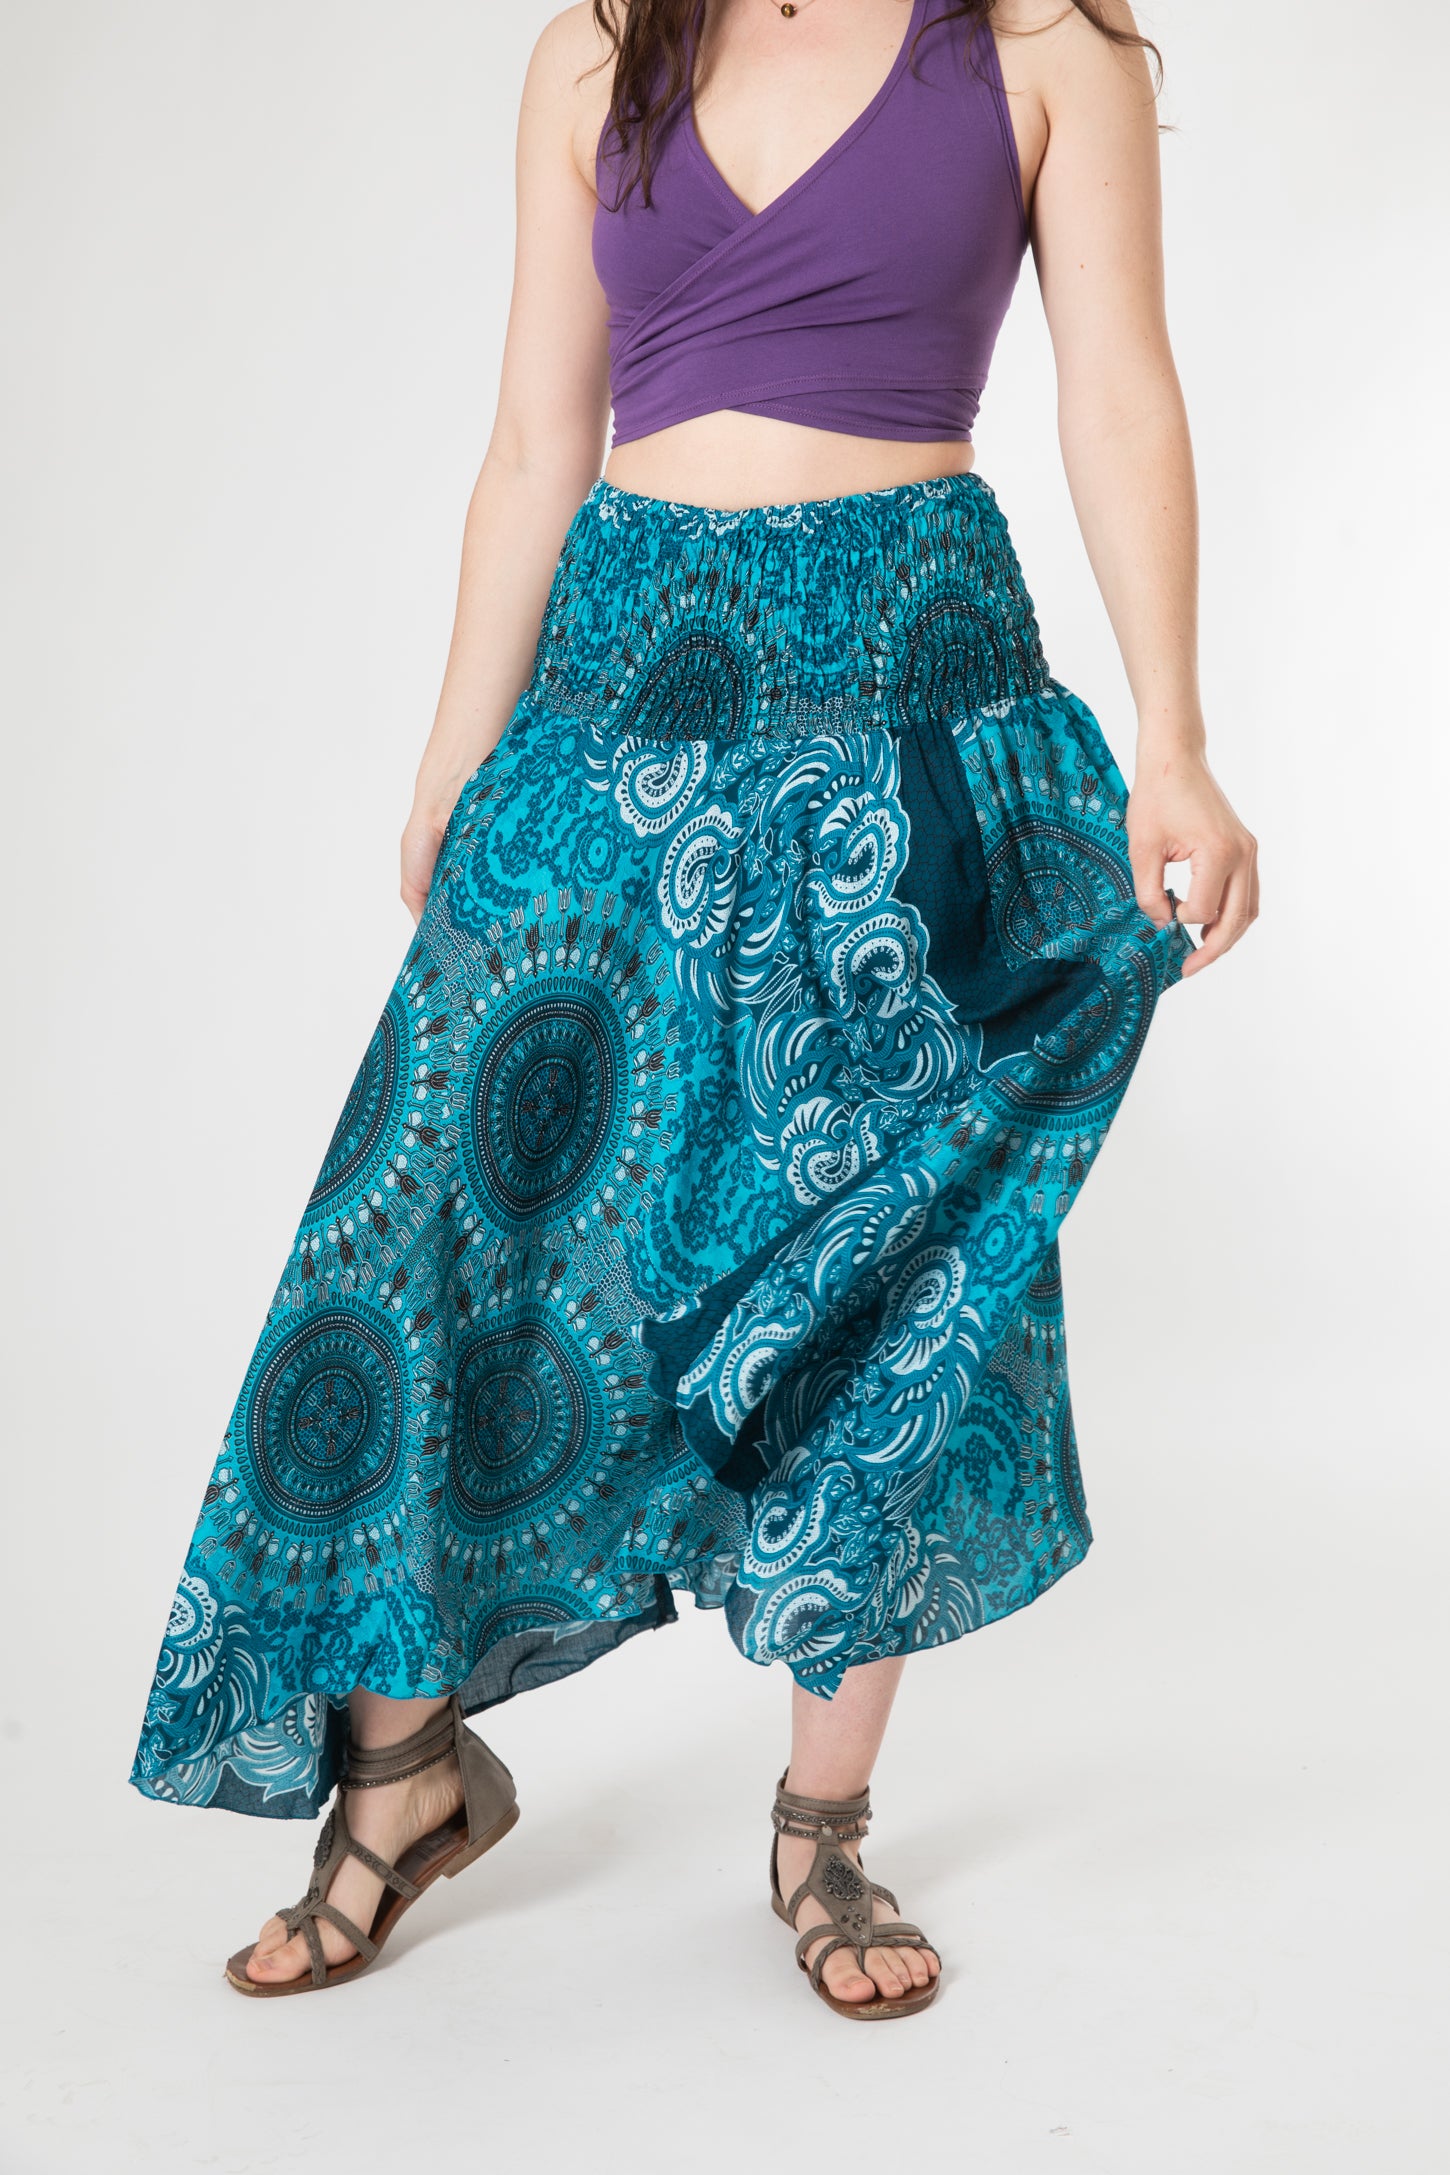 Mandala Convertible Skirt Top